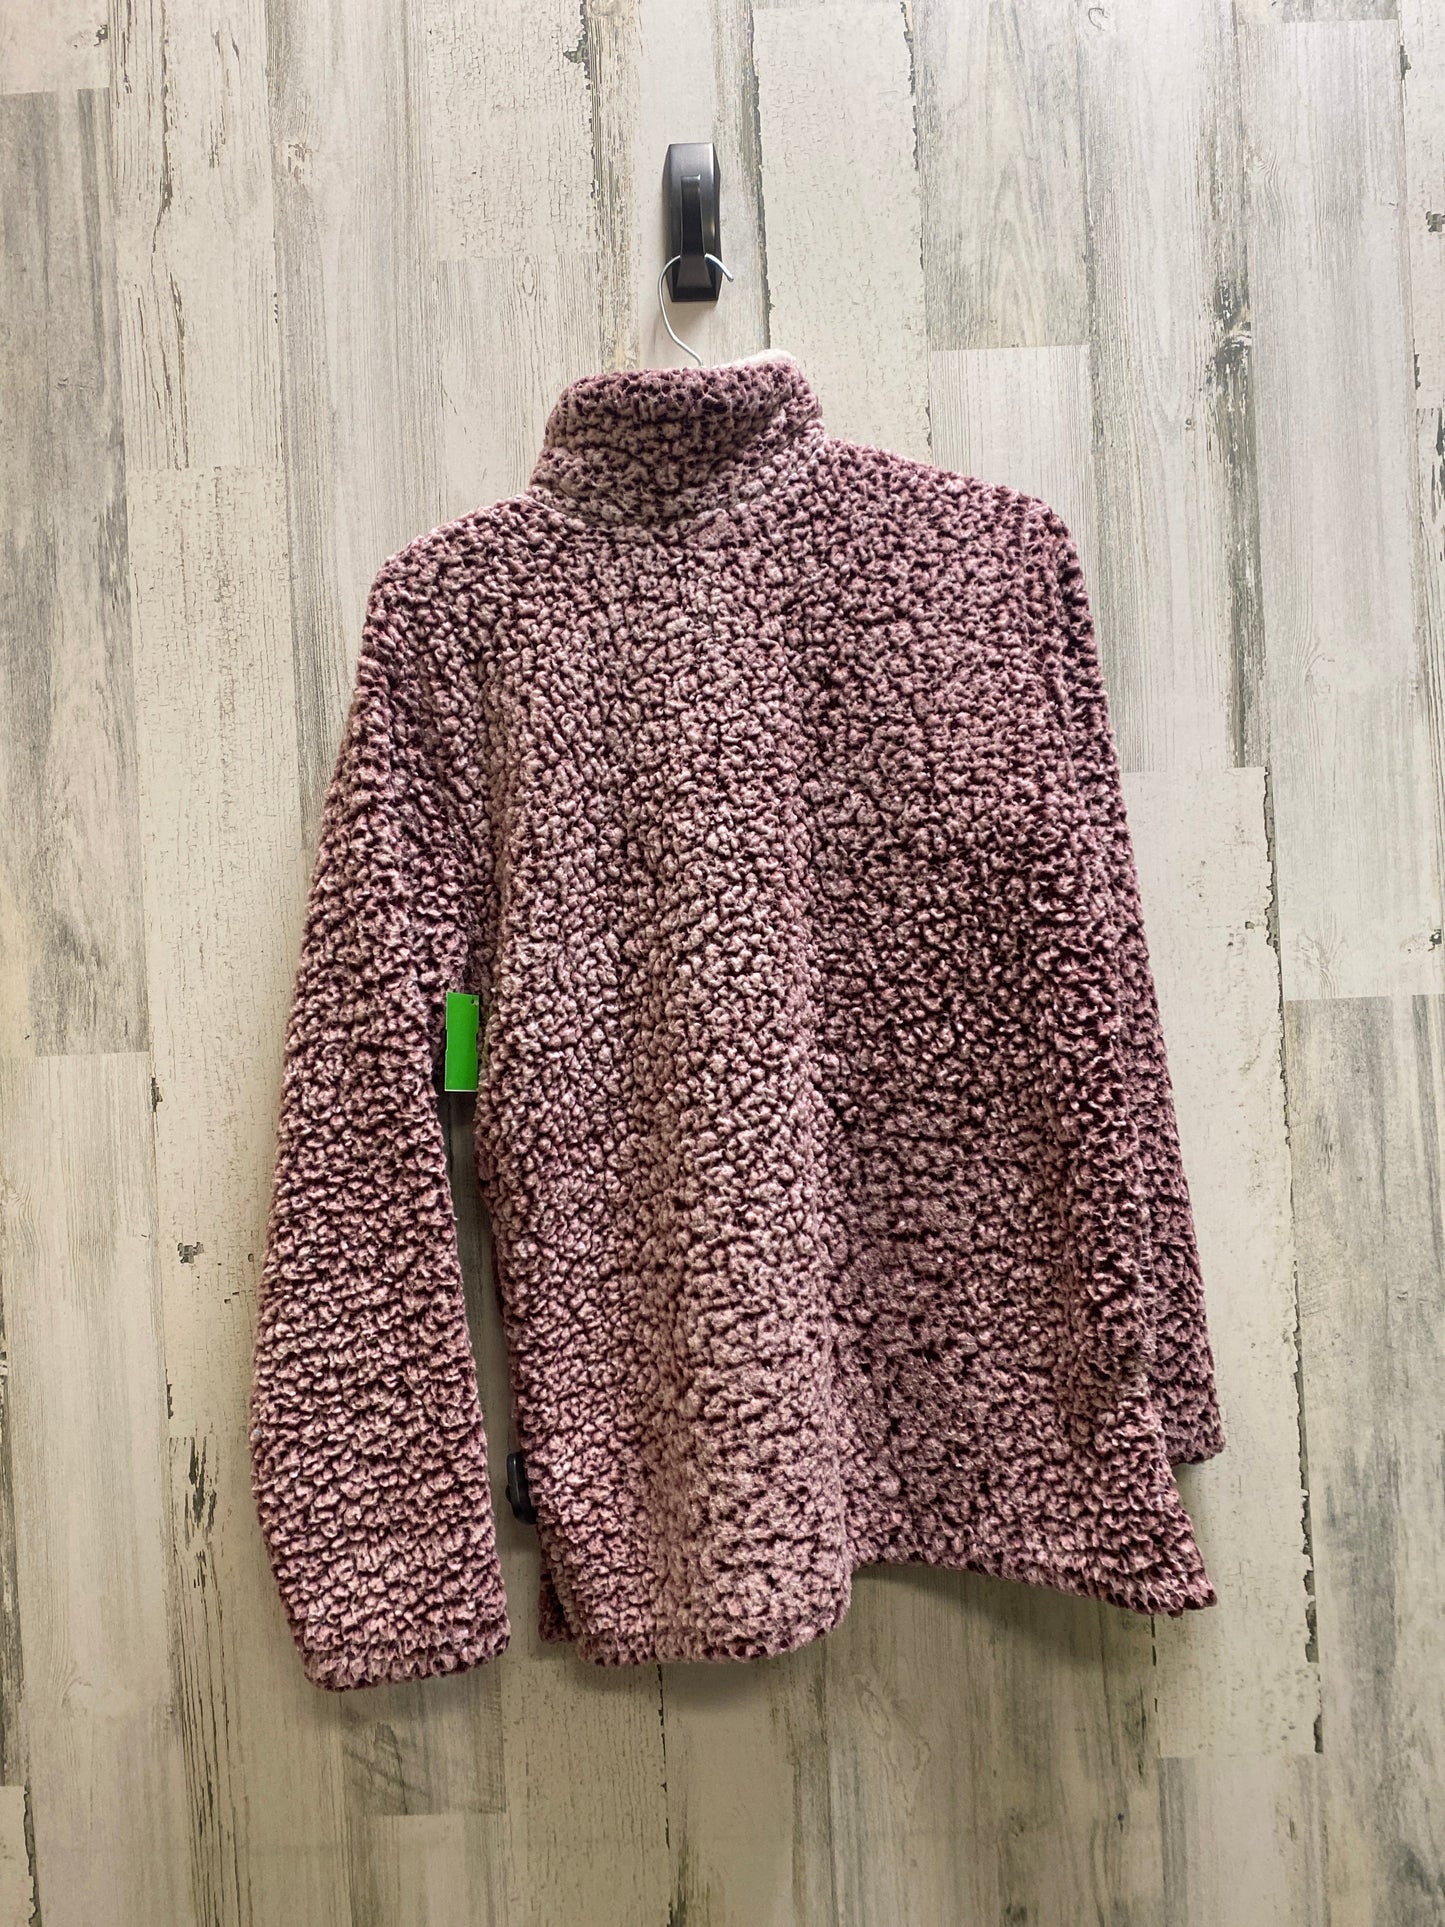 Sweater By Love Tree  Size: L